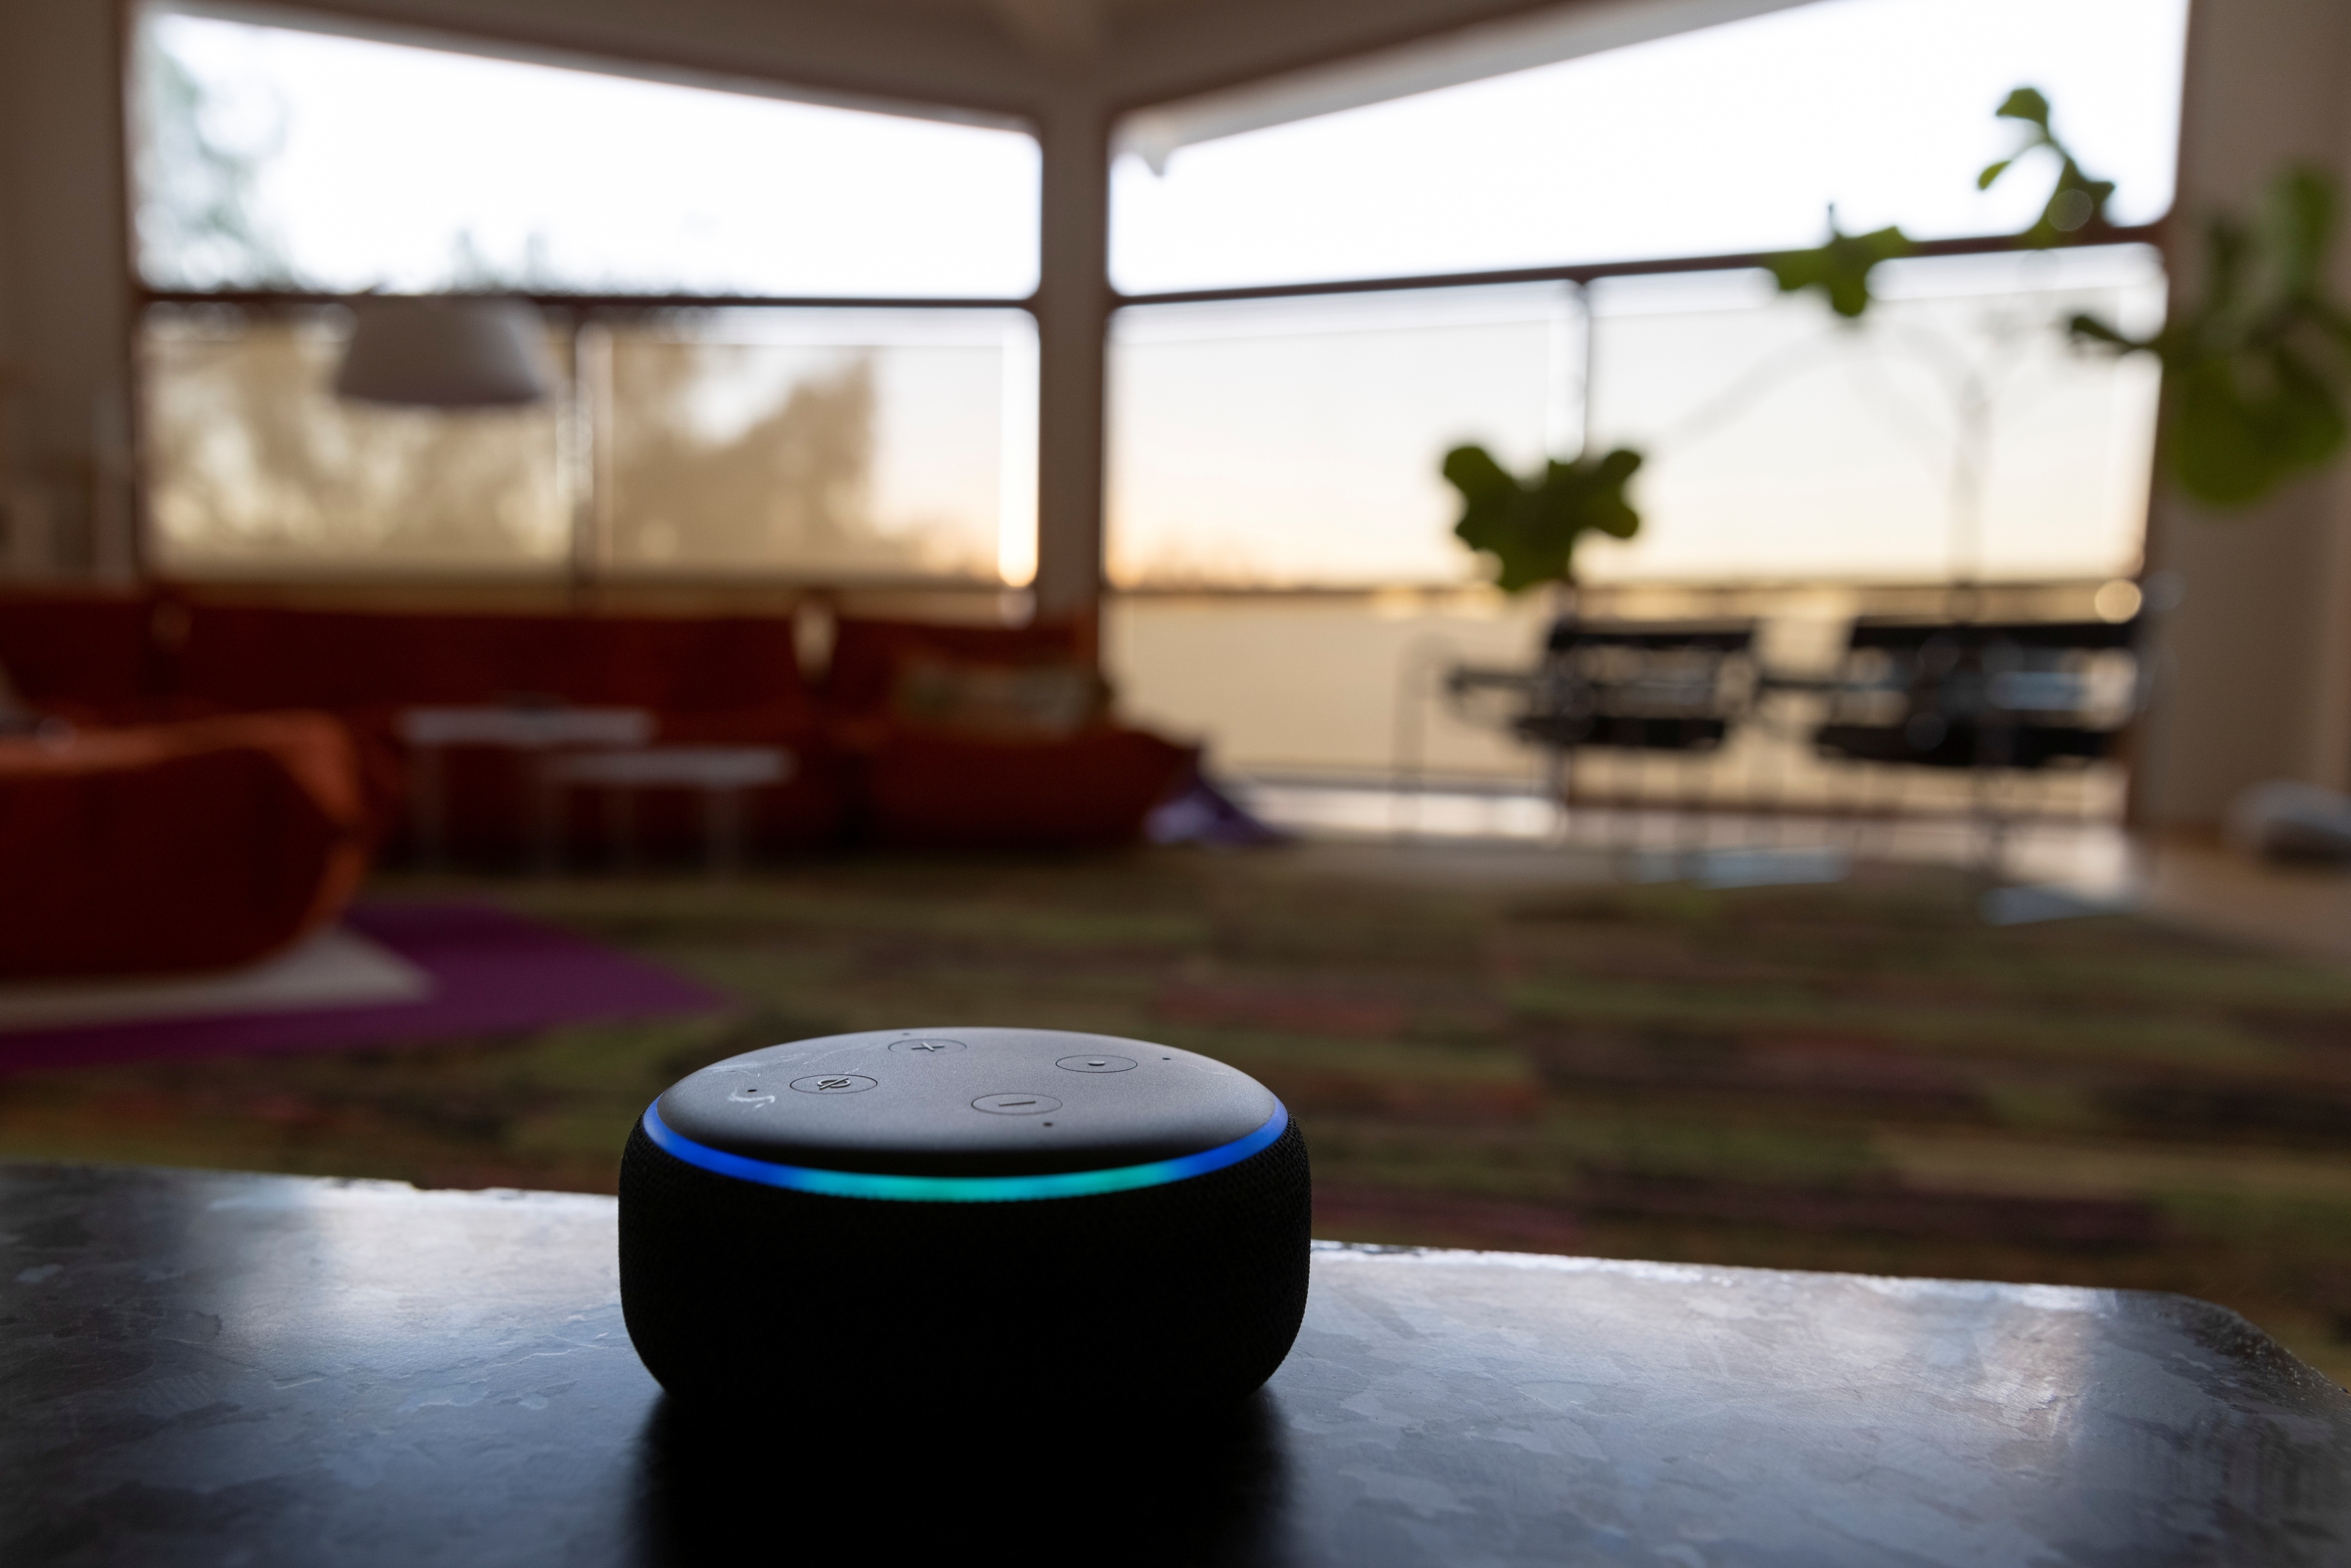 Amazon has a plan to make Alexa mimic anyone’s voice